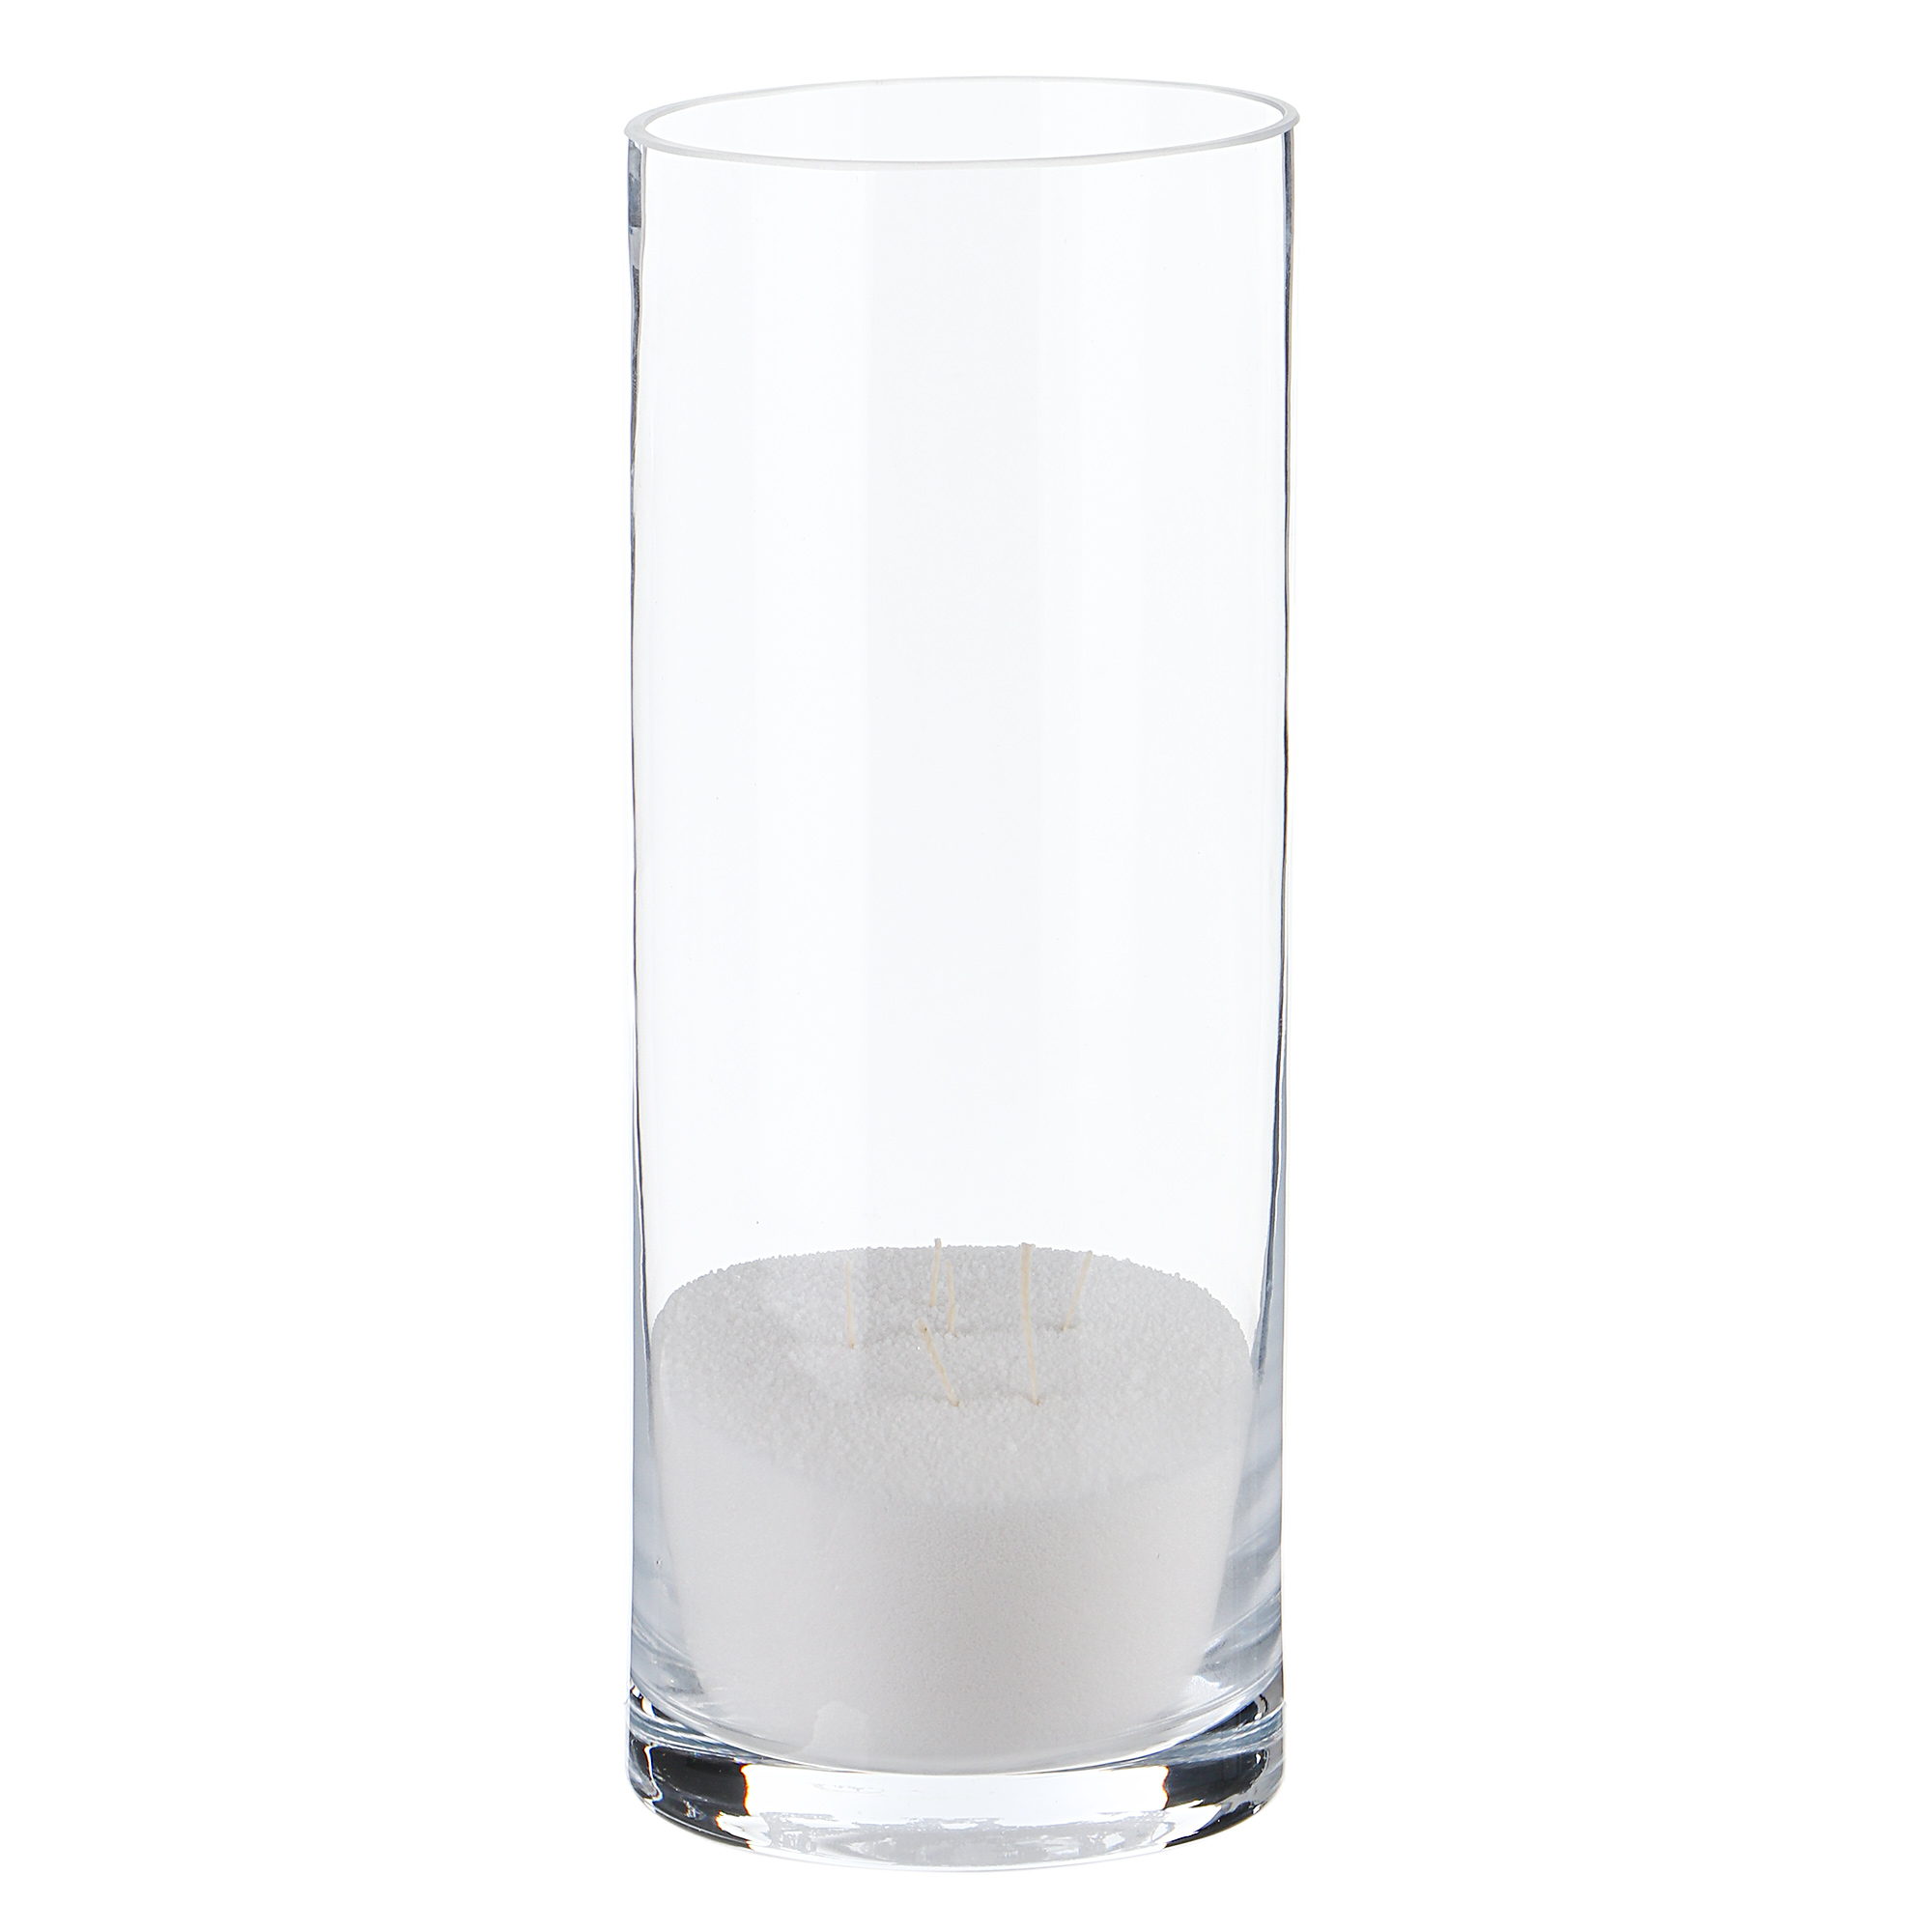 Ваза Hakbijl glass cylinder 30см д12см